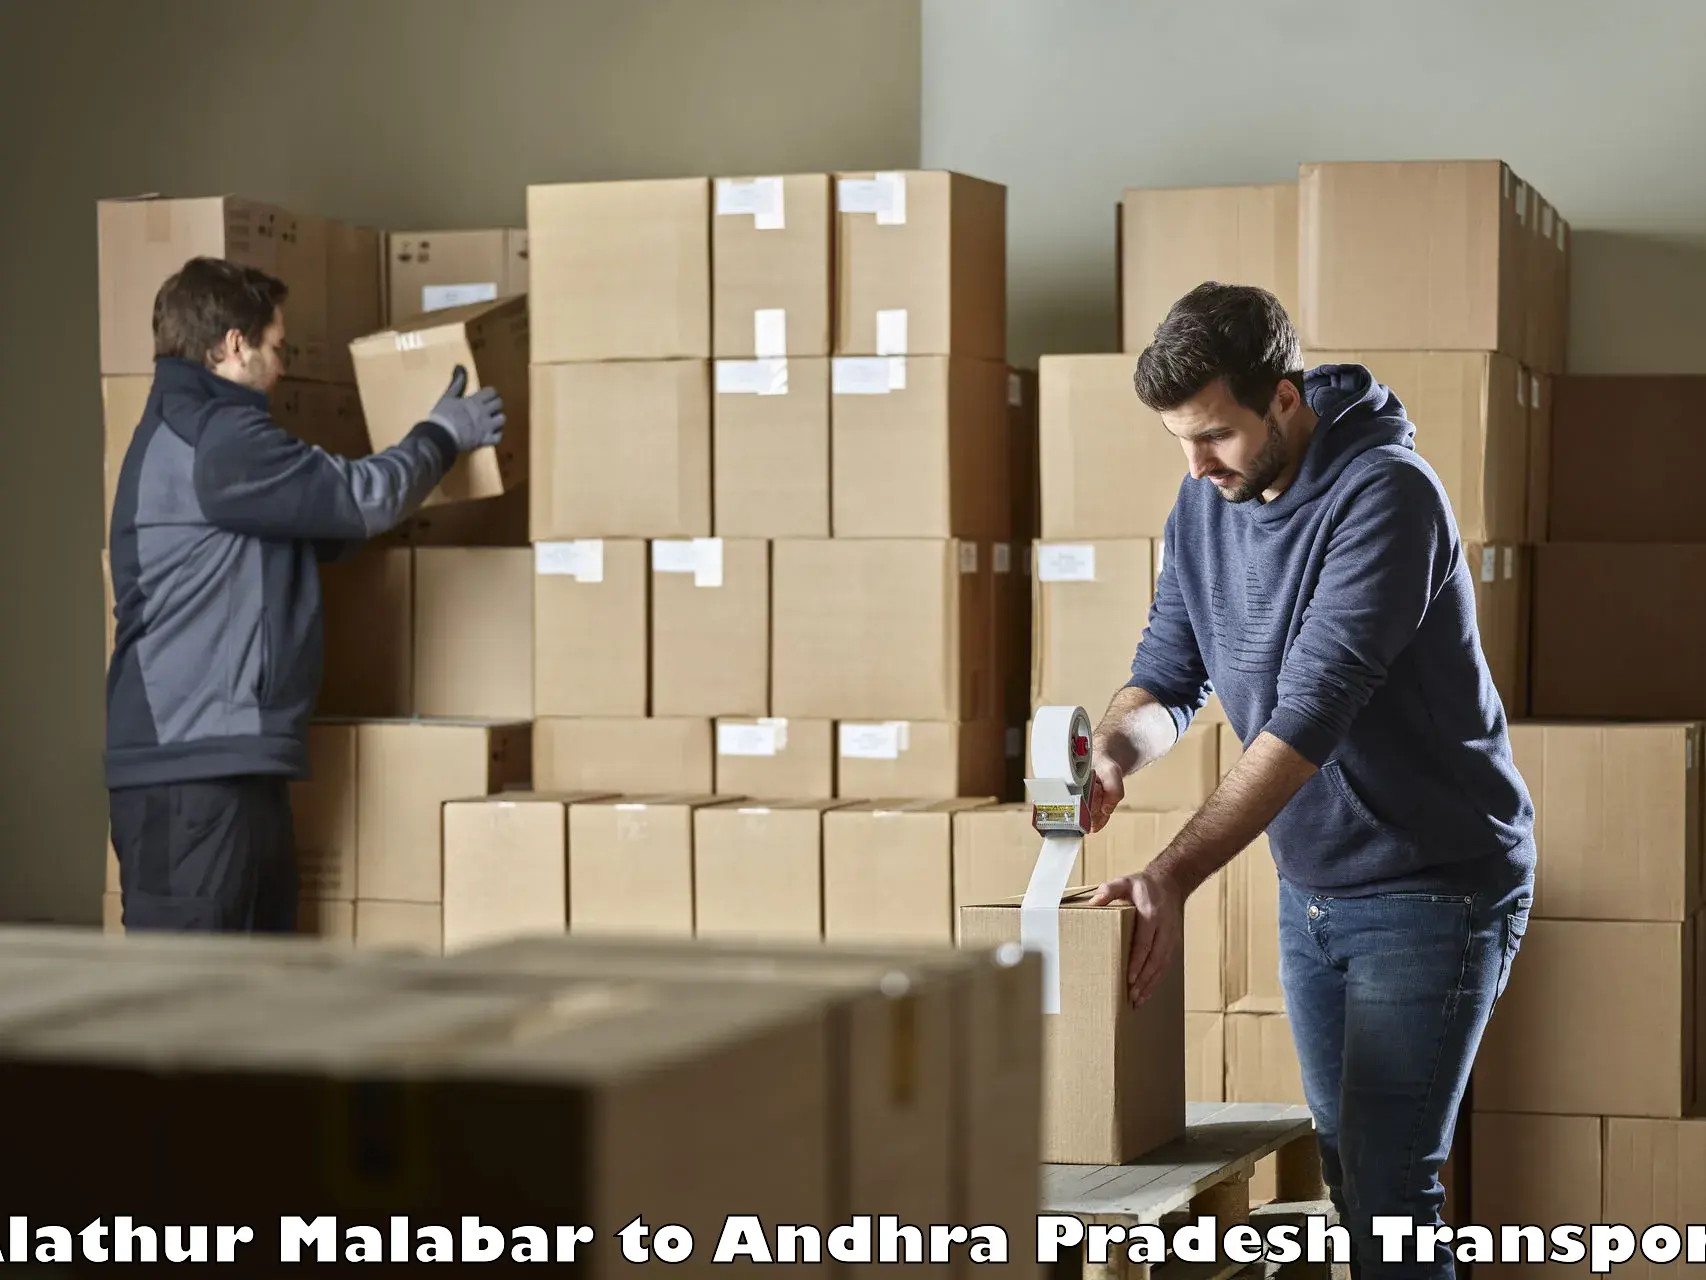 Transport shared services Alathur Malabar to Addateegala